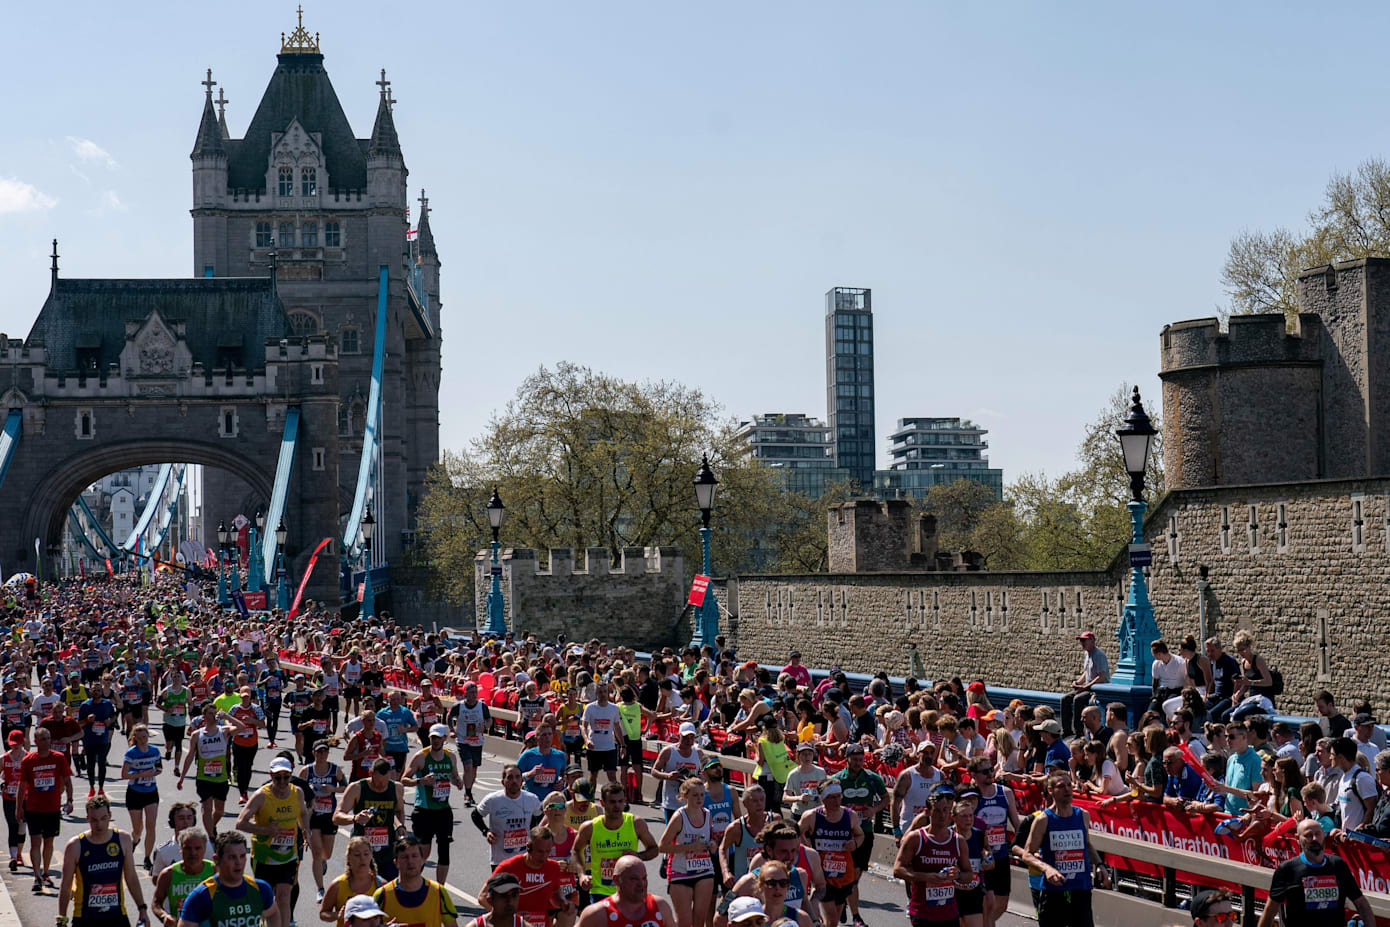 "Tower Bridge is the spirit of the London Marathon squeezed into 244m"